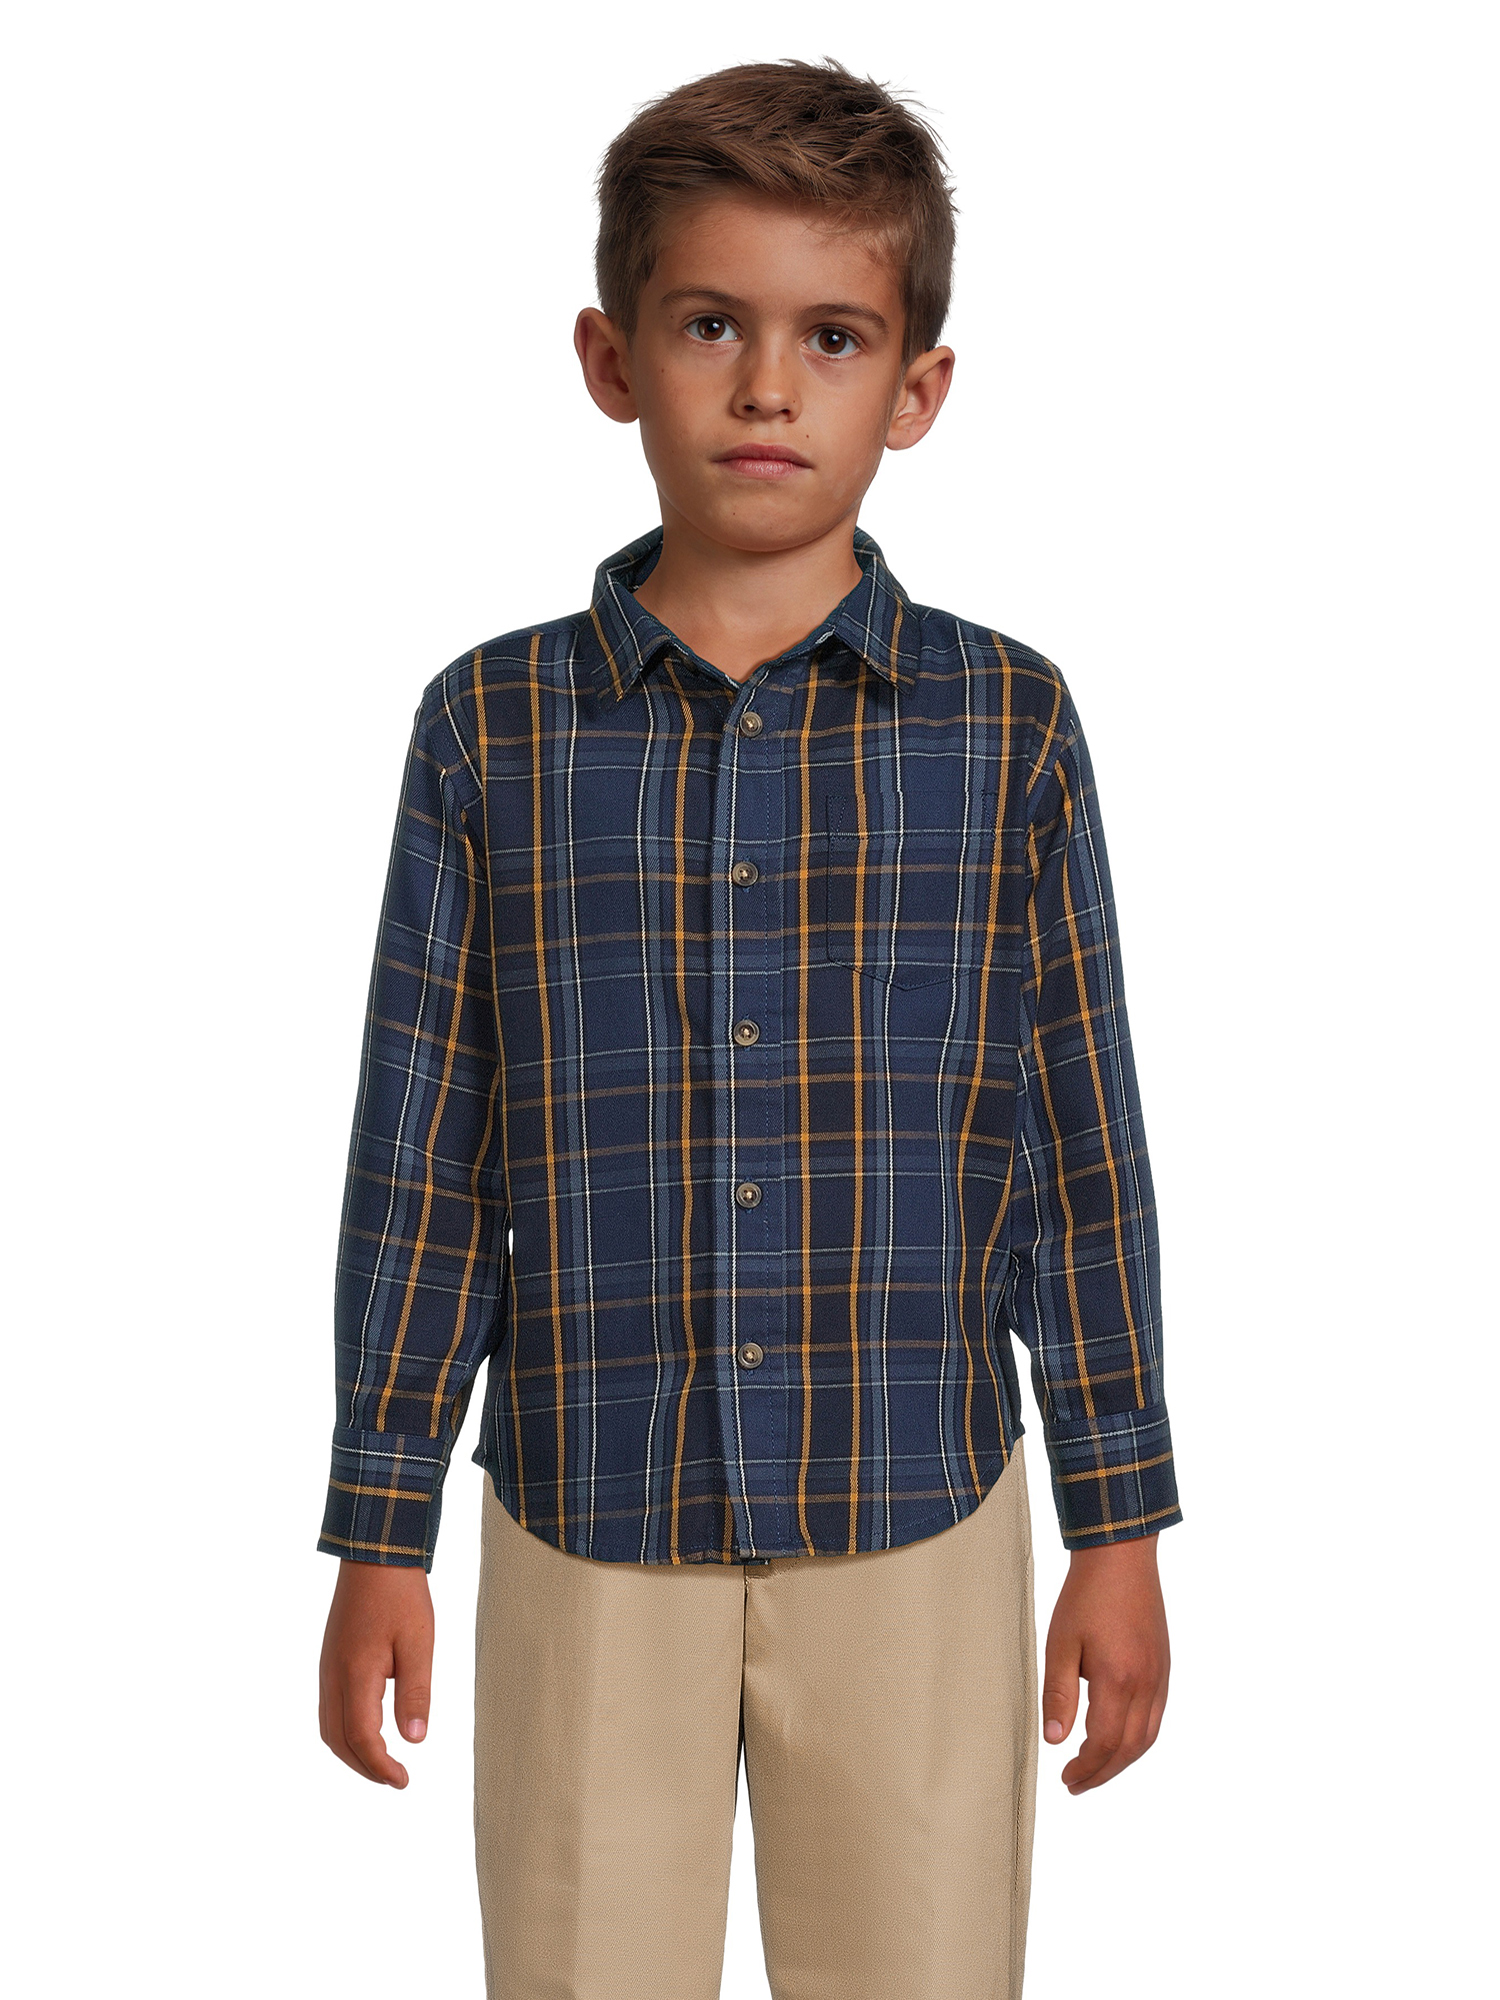 Wrangler Boys Long Sleeve Button-Up Twill Shirt, Sizes 4-18 & Husky - image 1 of 5